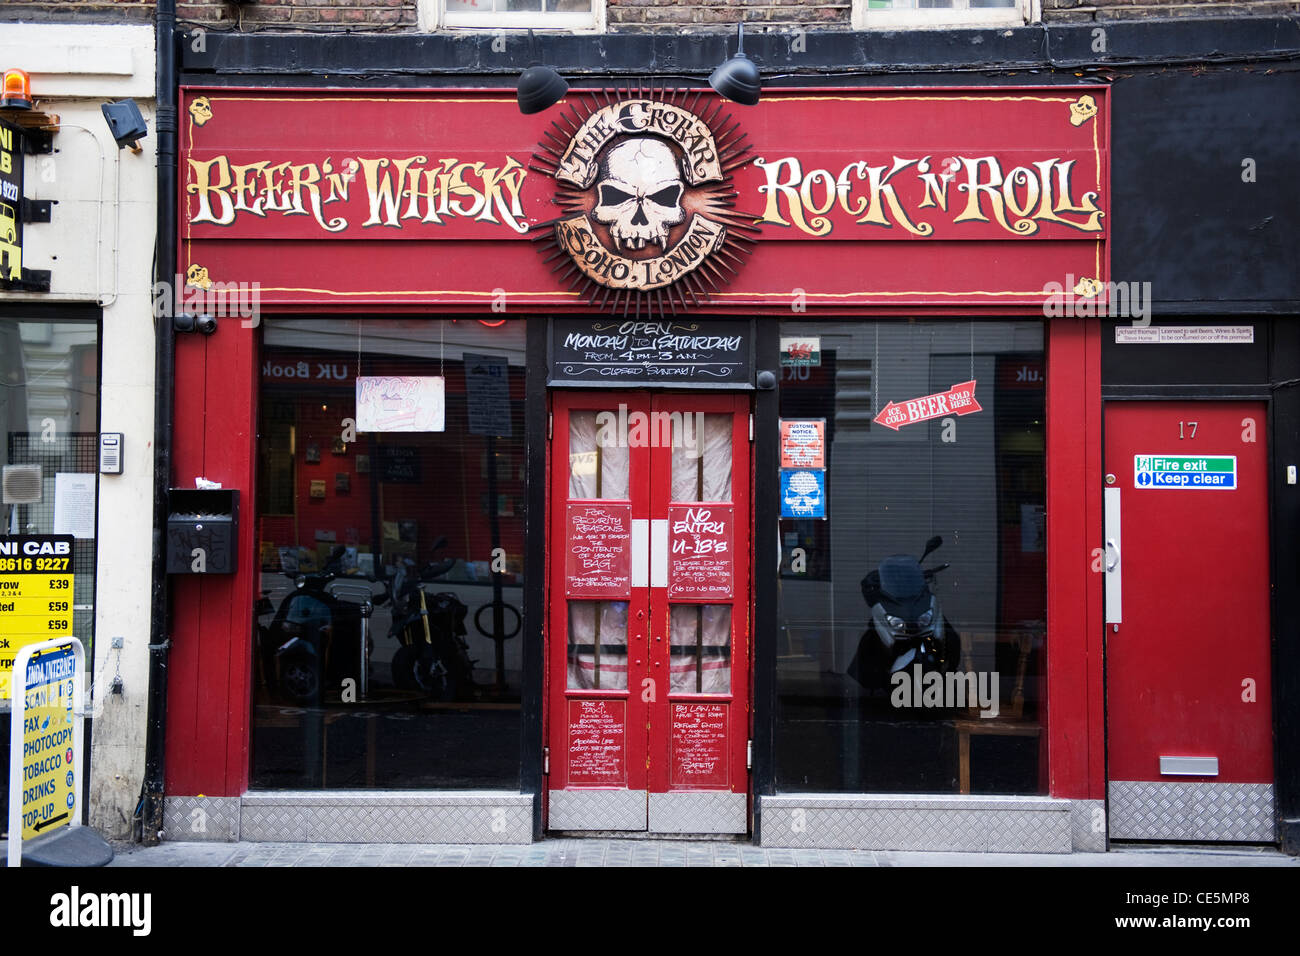 West End Charing Cross Road Soho London The Crobar Beer n Whisky Rock n Roll bar venue signs skull windows doors Manette Street entrance street scene Stock Photo